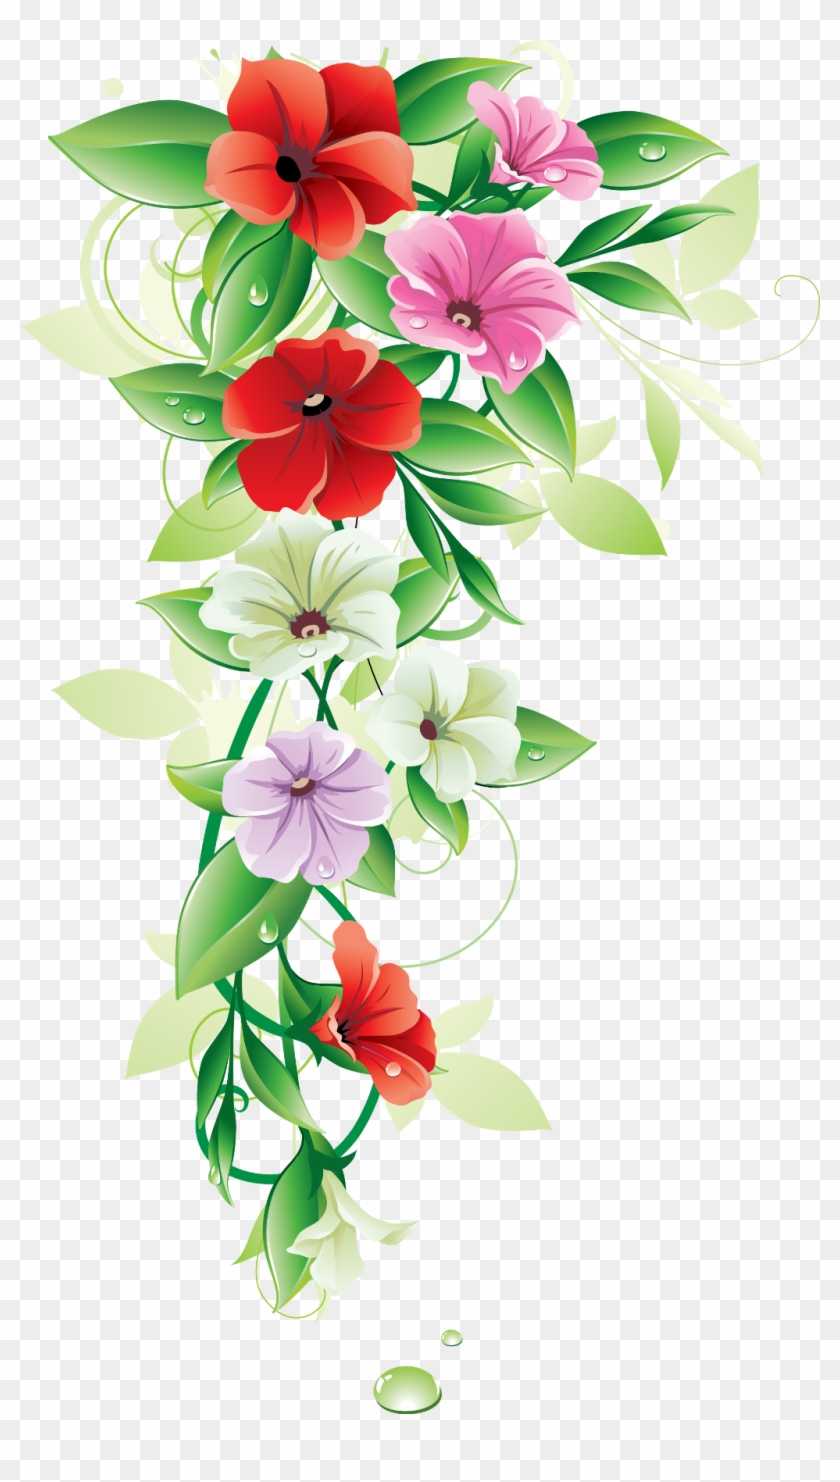 Natural Beautiful Flowers Clipart Graphic Royalty Free - Bride Custom Newlywed Beach Towel #1470462